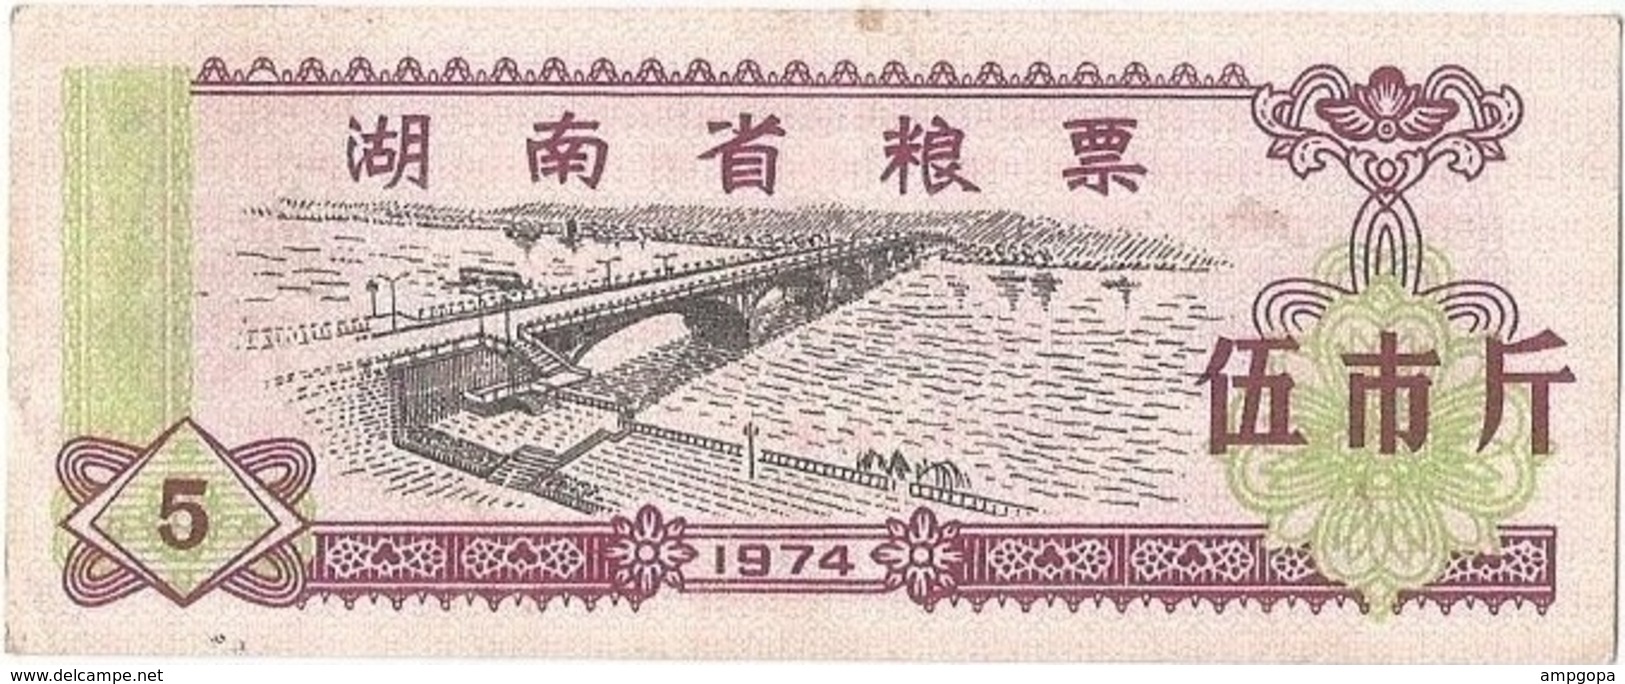 China 5 Jin Hunan 1974 Ref 371-1 UNC - Cina